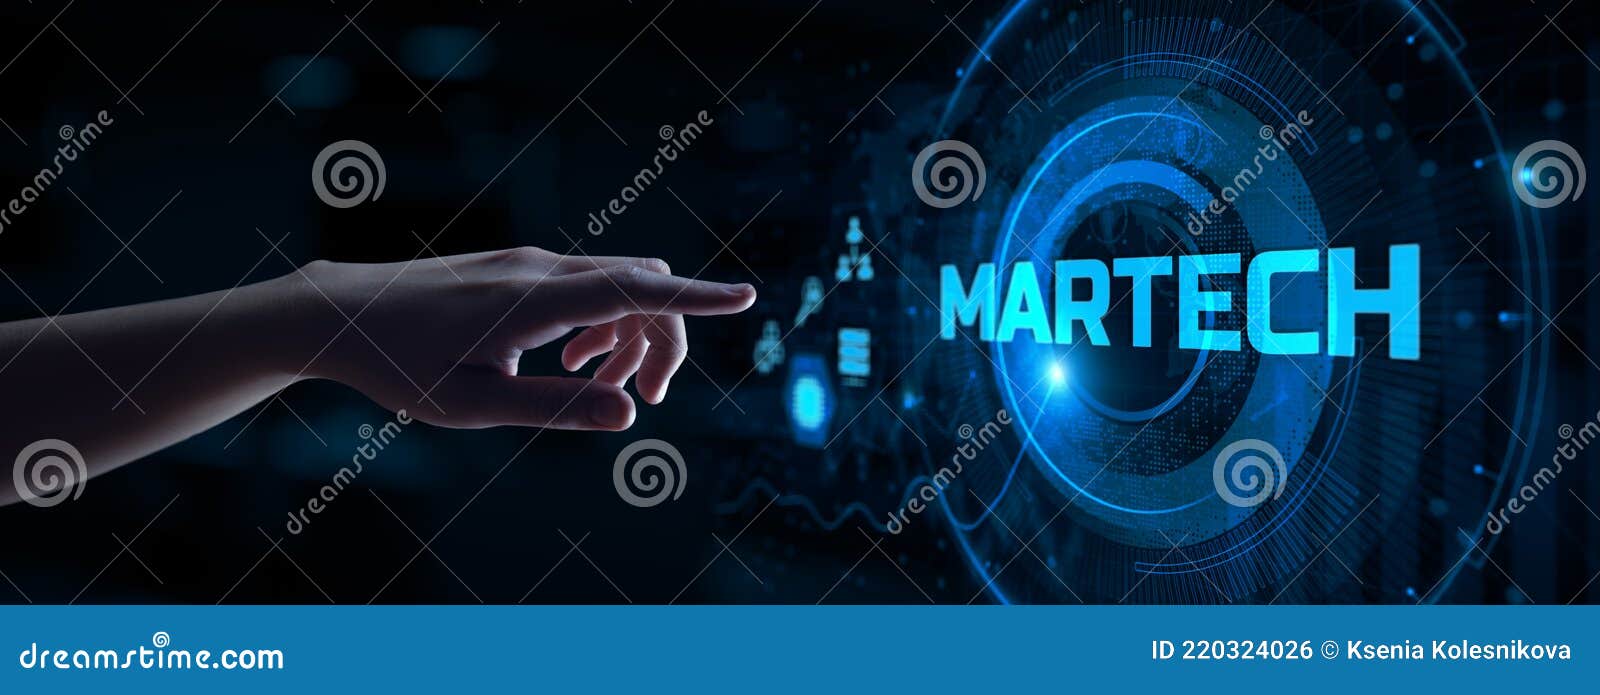 martech marketing technology concept. hand pressing button on screen